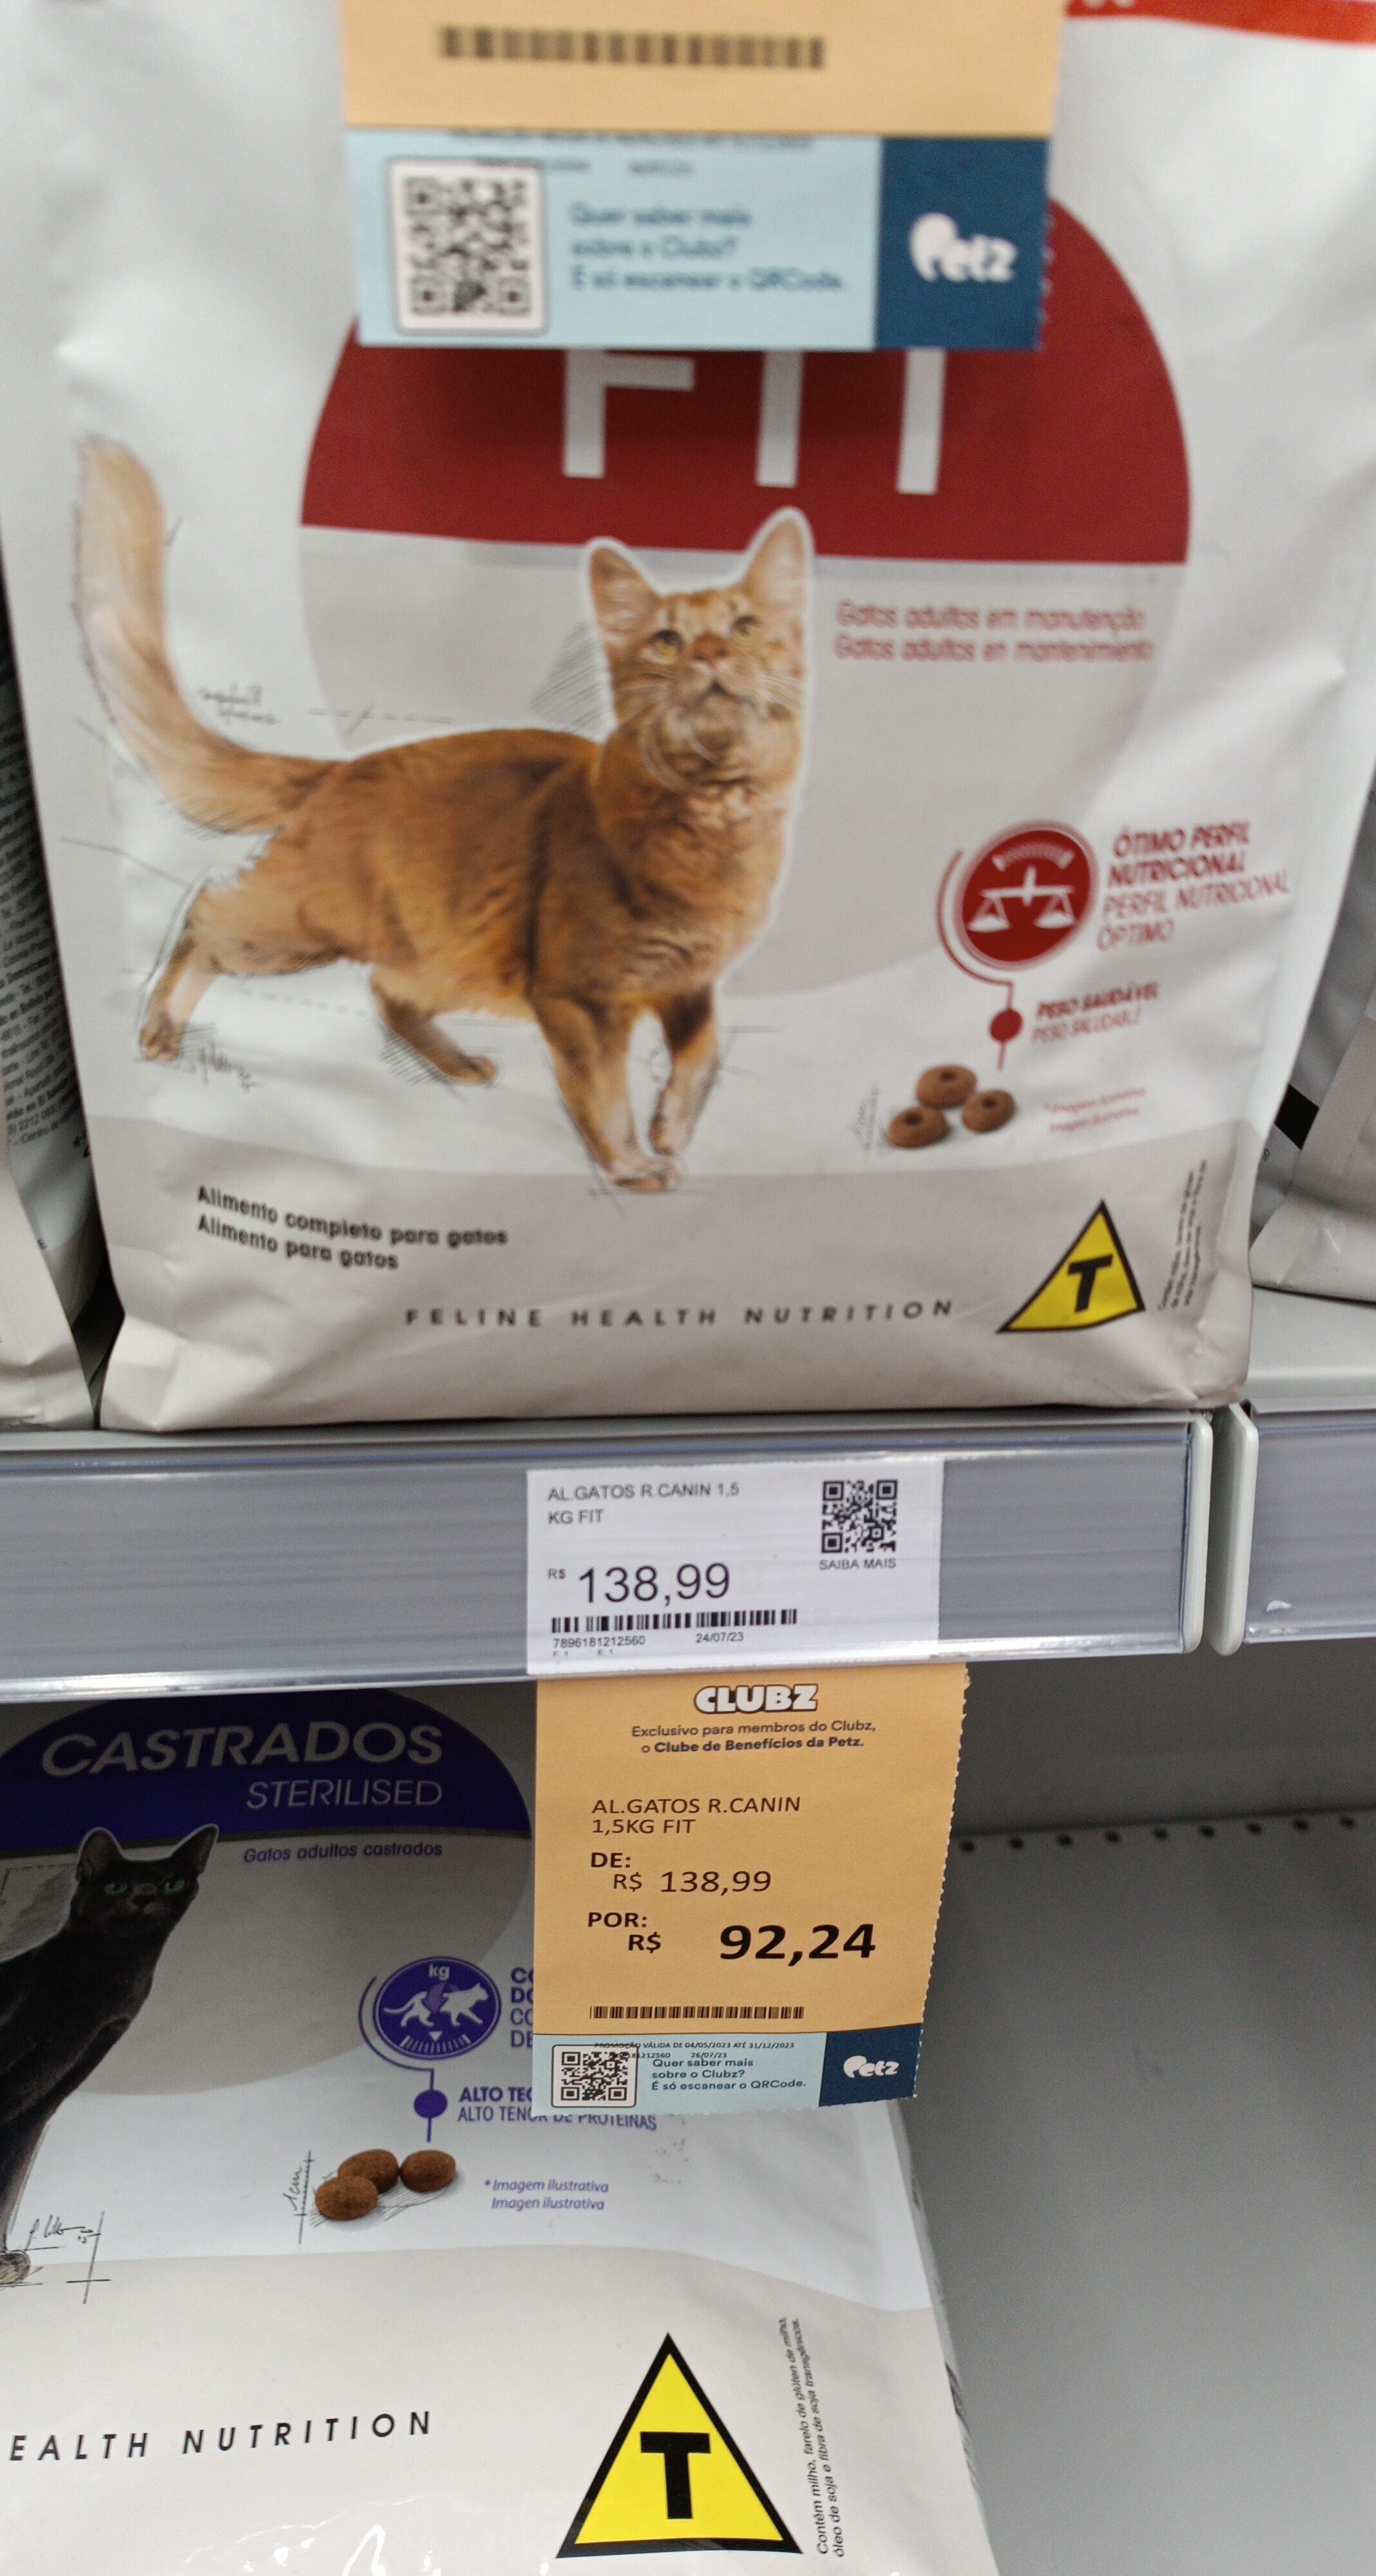 Royal canin fit  1,5 kg gatos - Product - pt